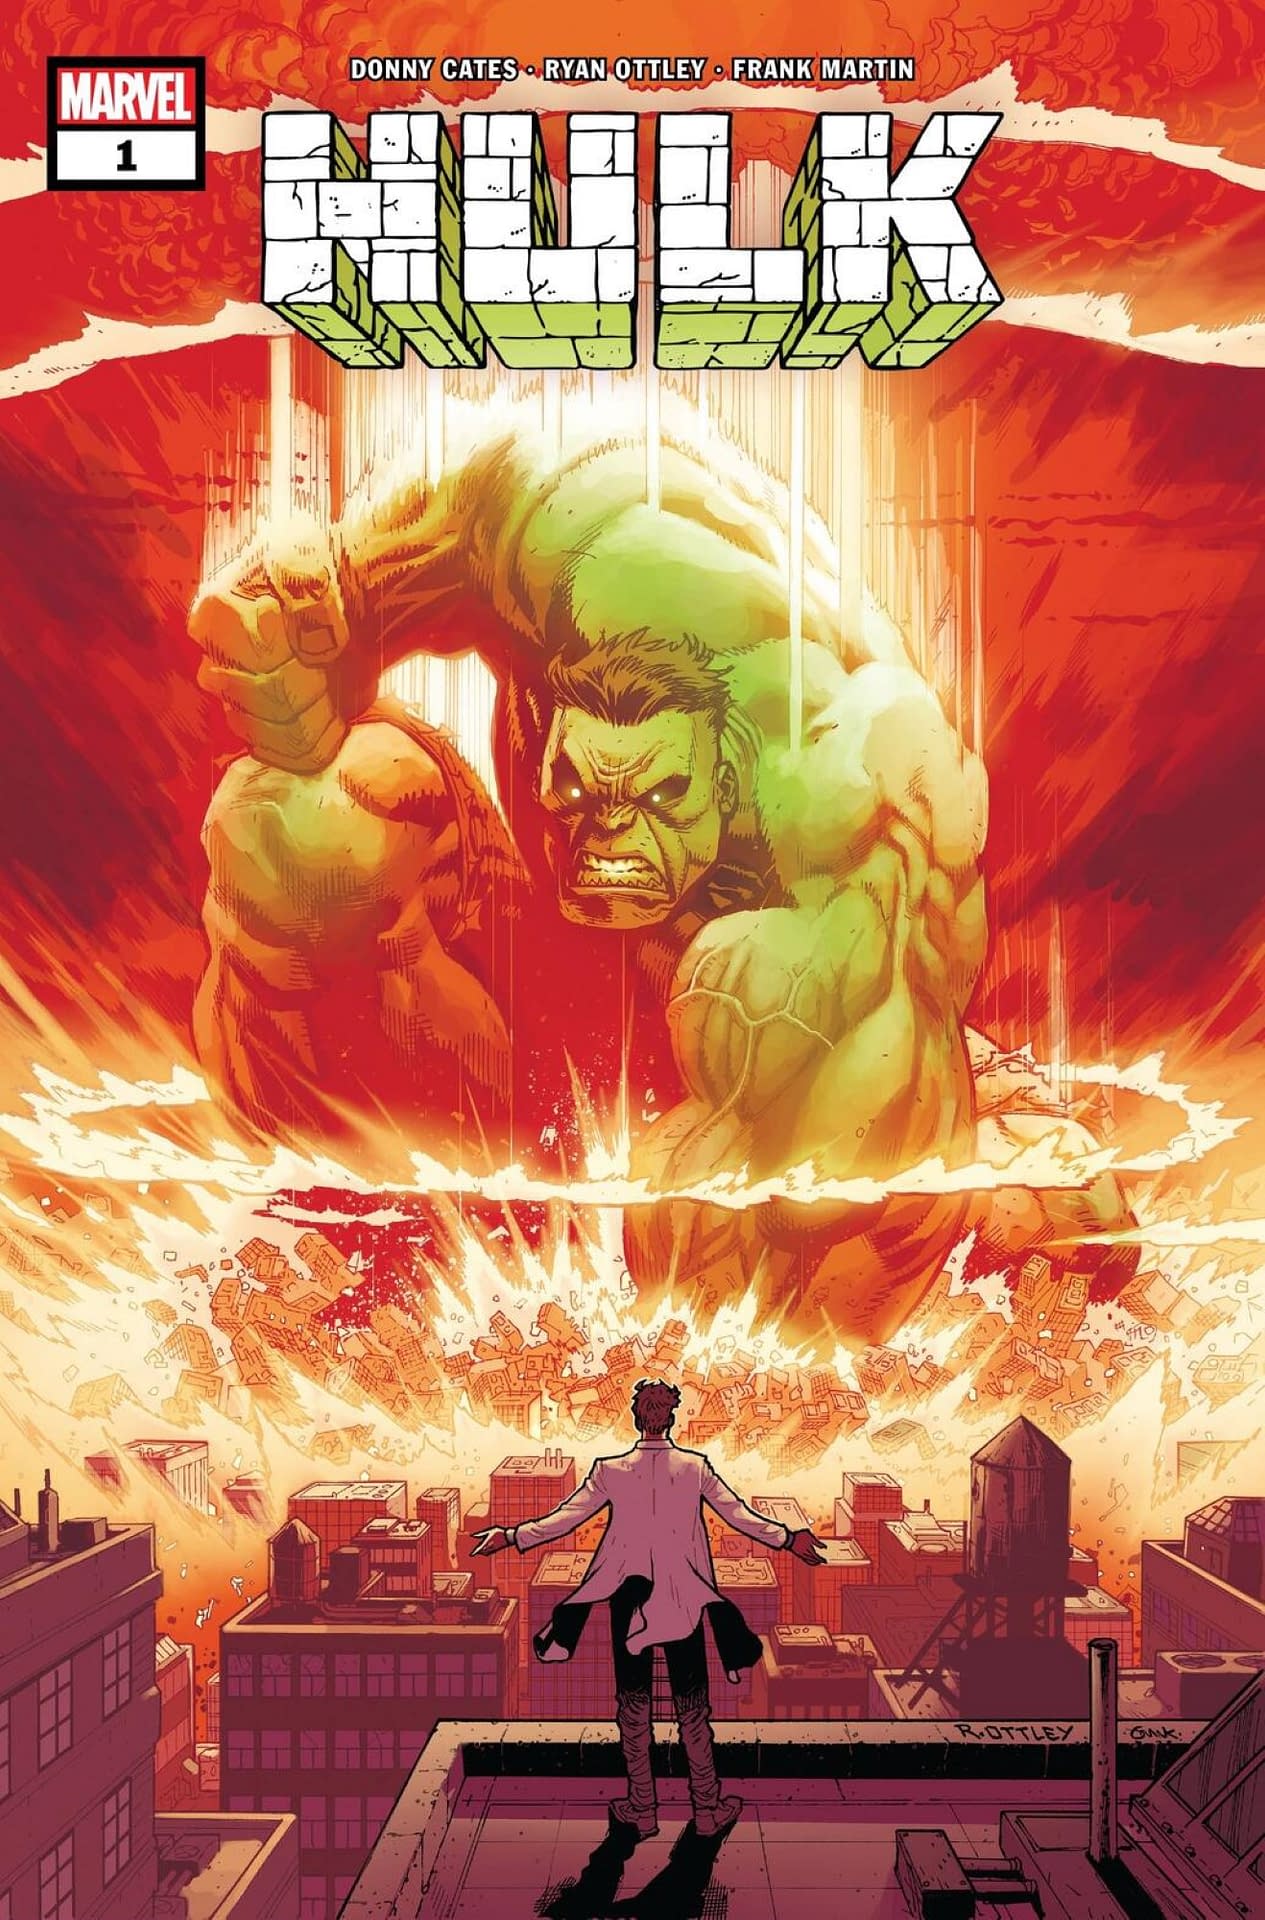 Donny Cates and Ryan Ottley Take Over Hulk Comic in November